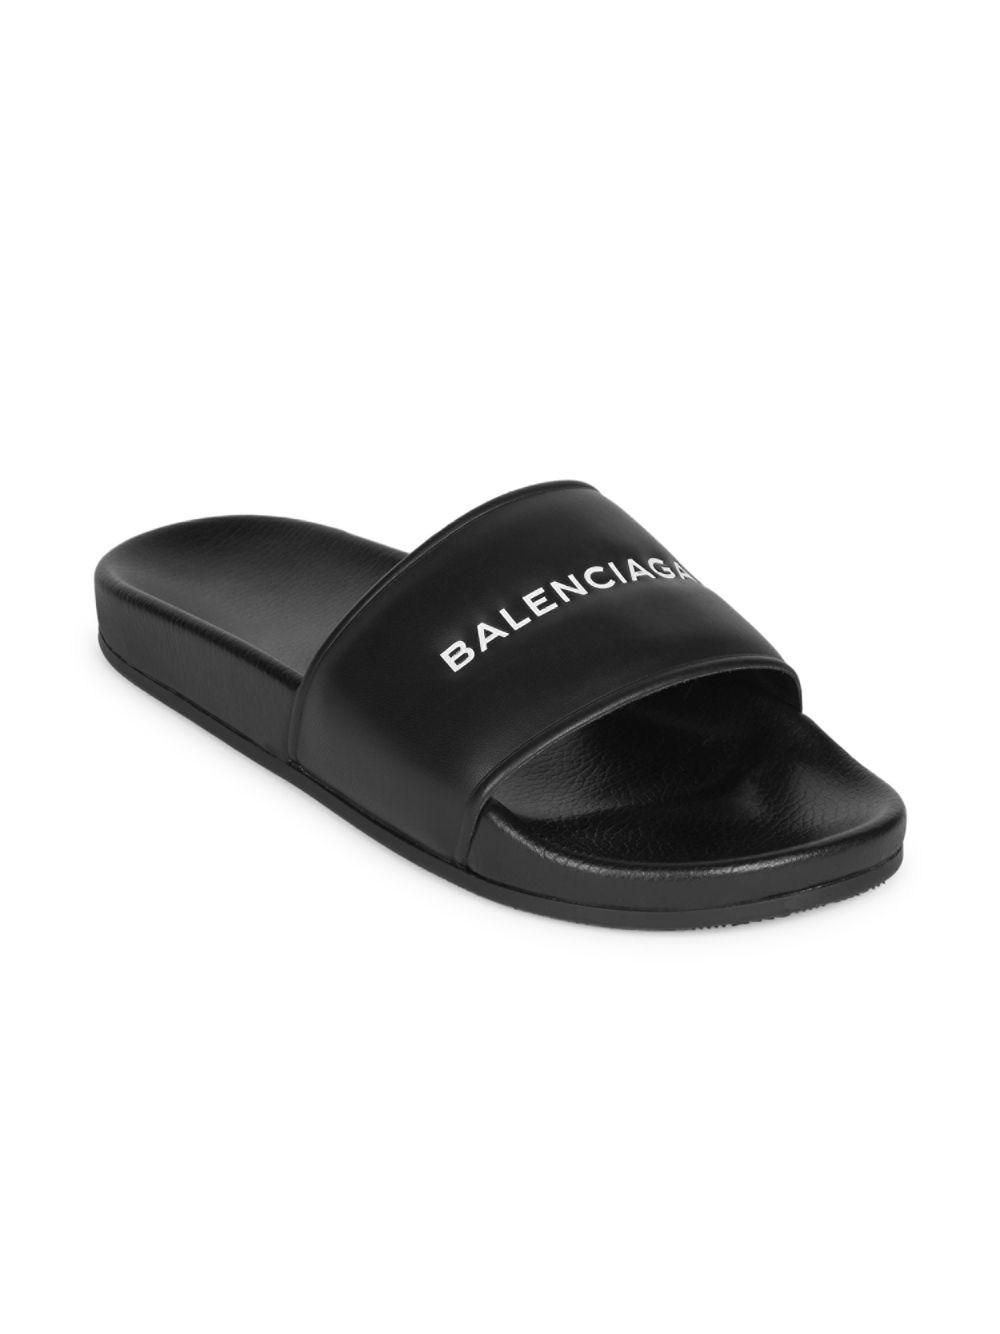 Balenciaga Leather Logo Pool Slides in Black for Men - Lyst